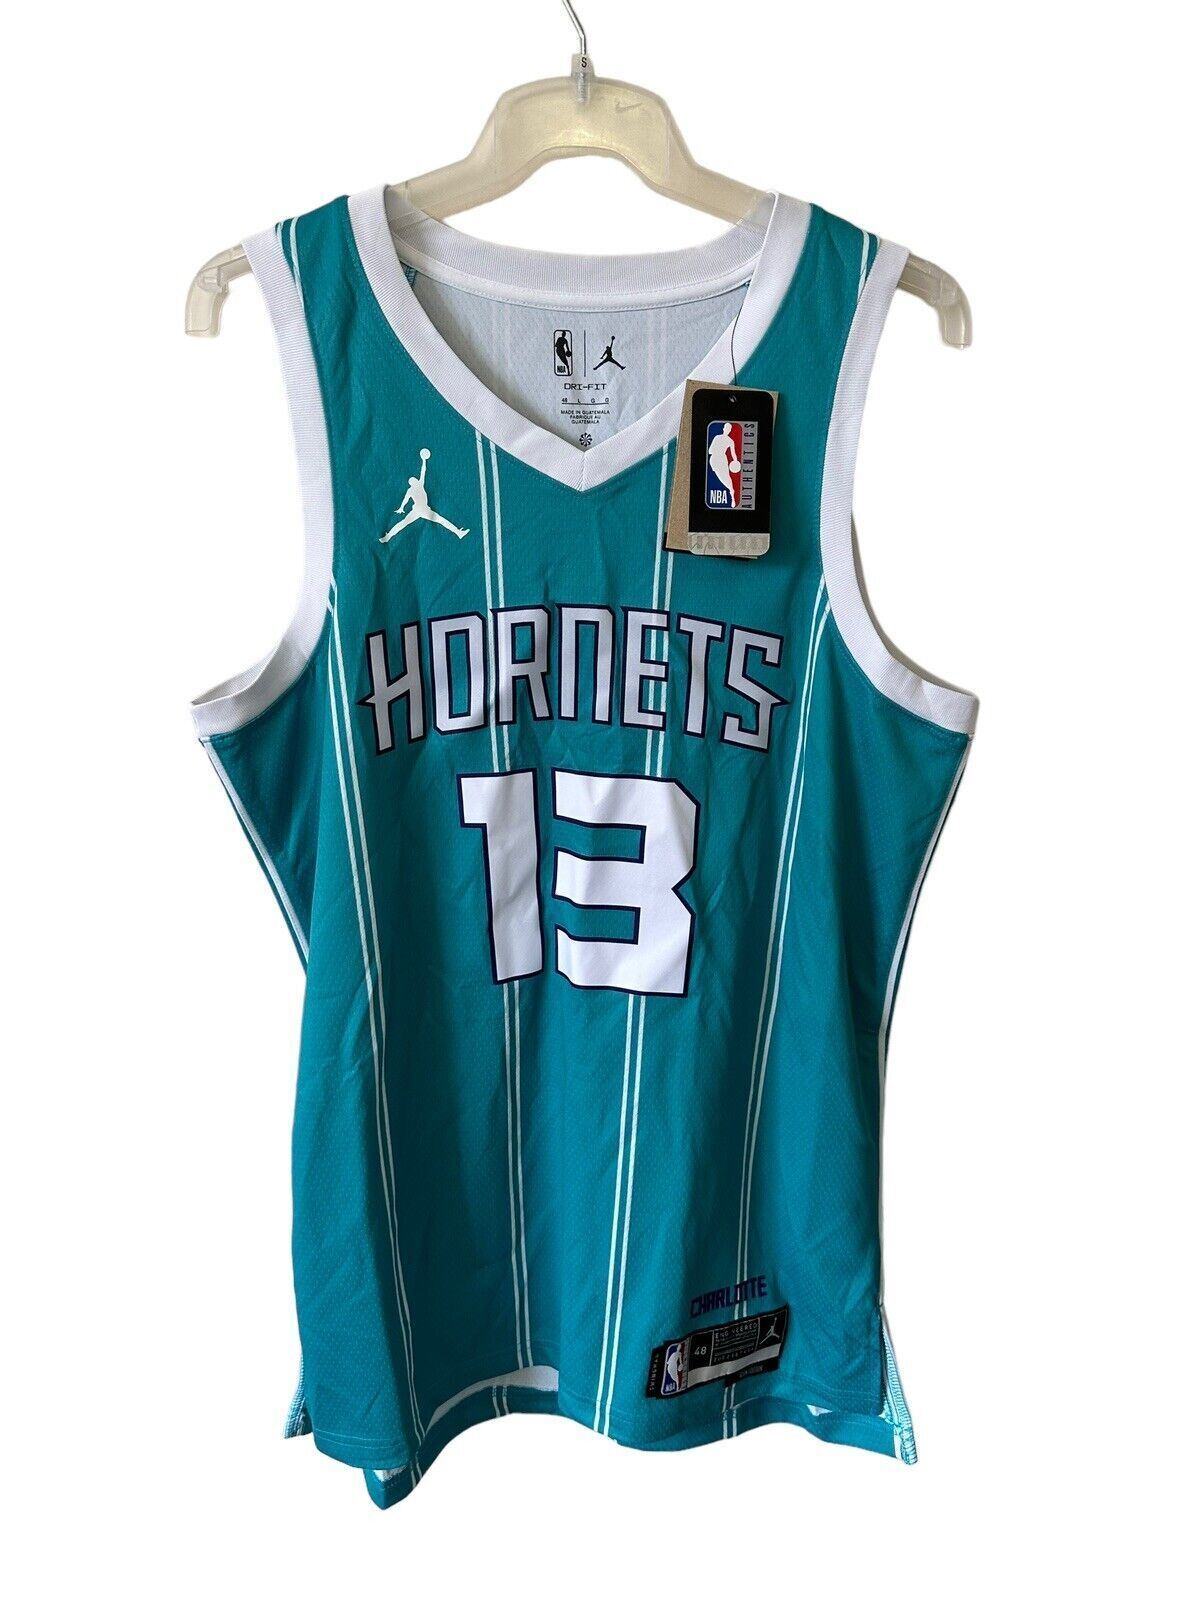 Jordan NBA Charlotte Hornets Icon Edition Jersey UROS R 13 Basketball Mens Large